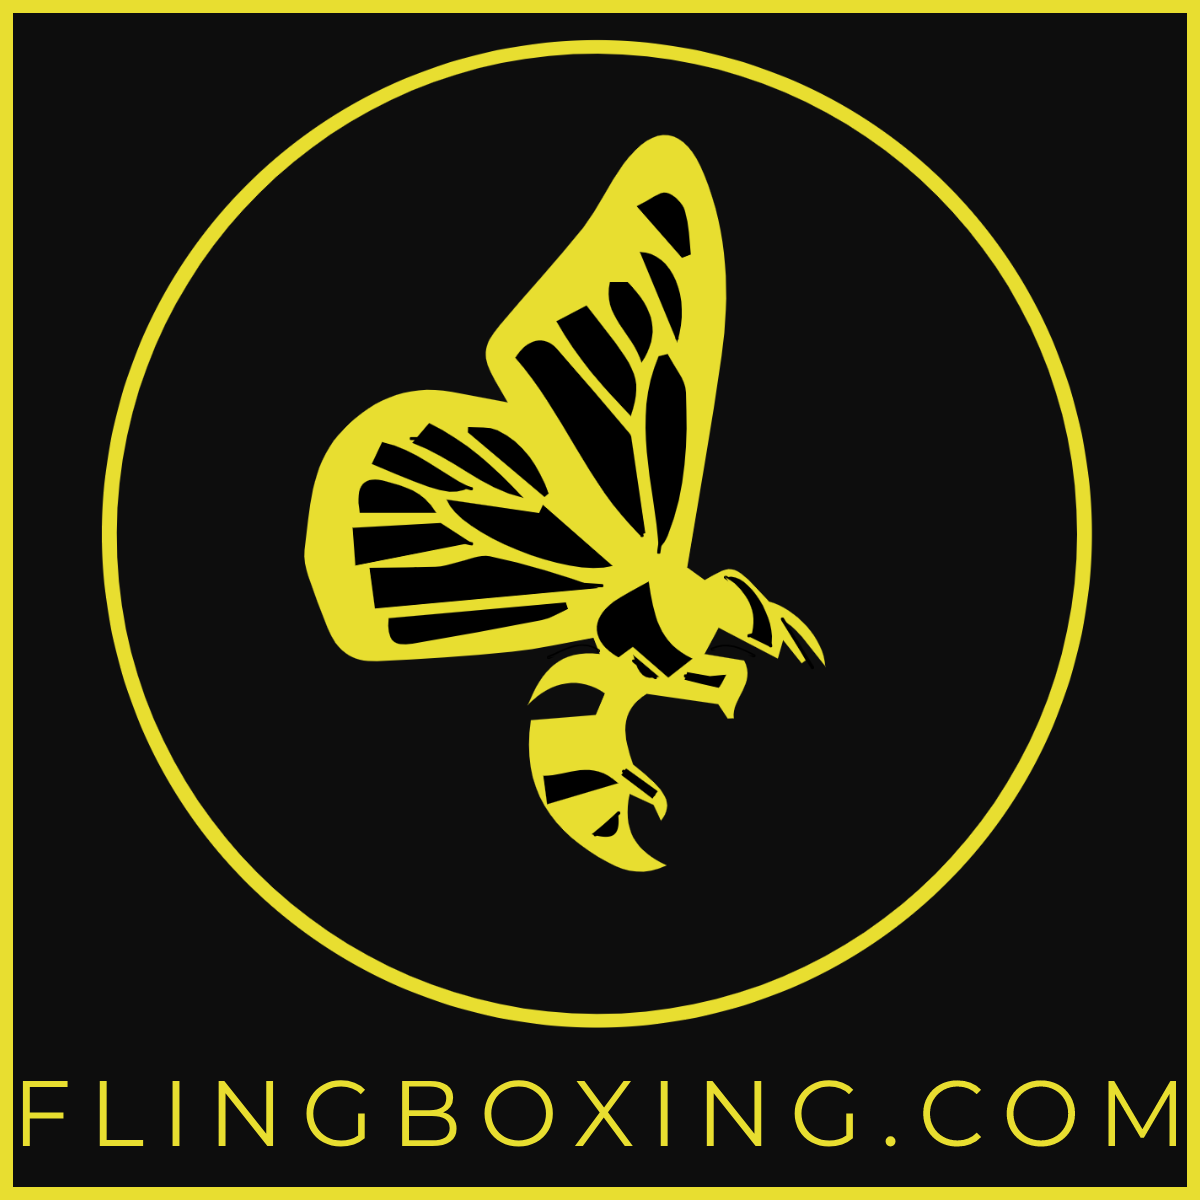 Website Fling Boxing